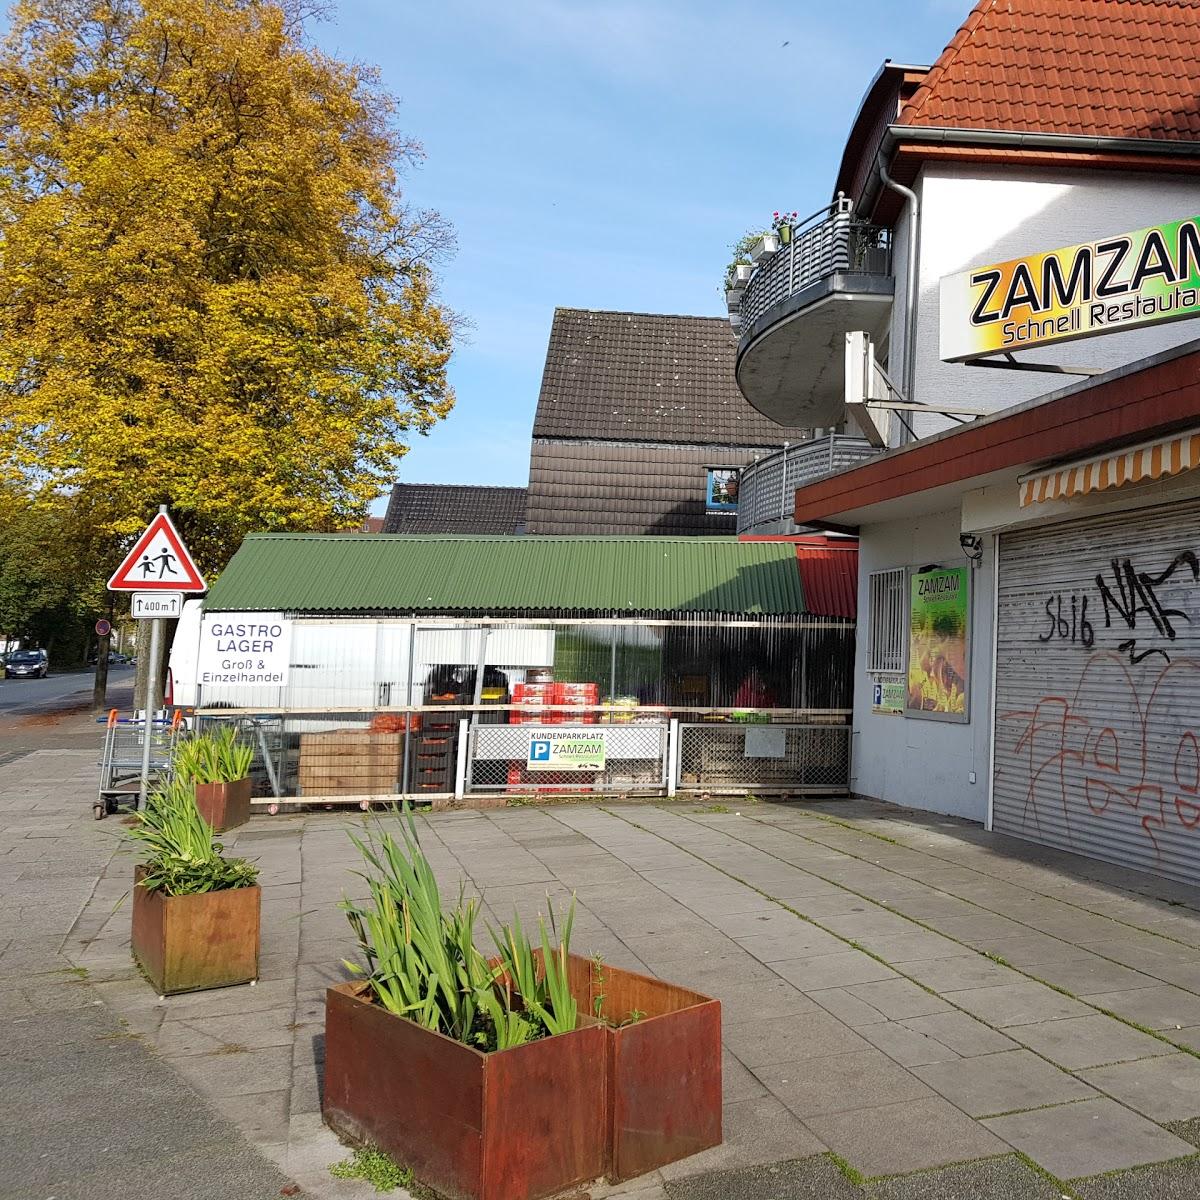 Restaurant "ZamZam Pizza" in Bremen